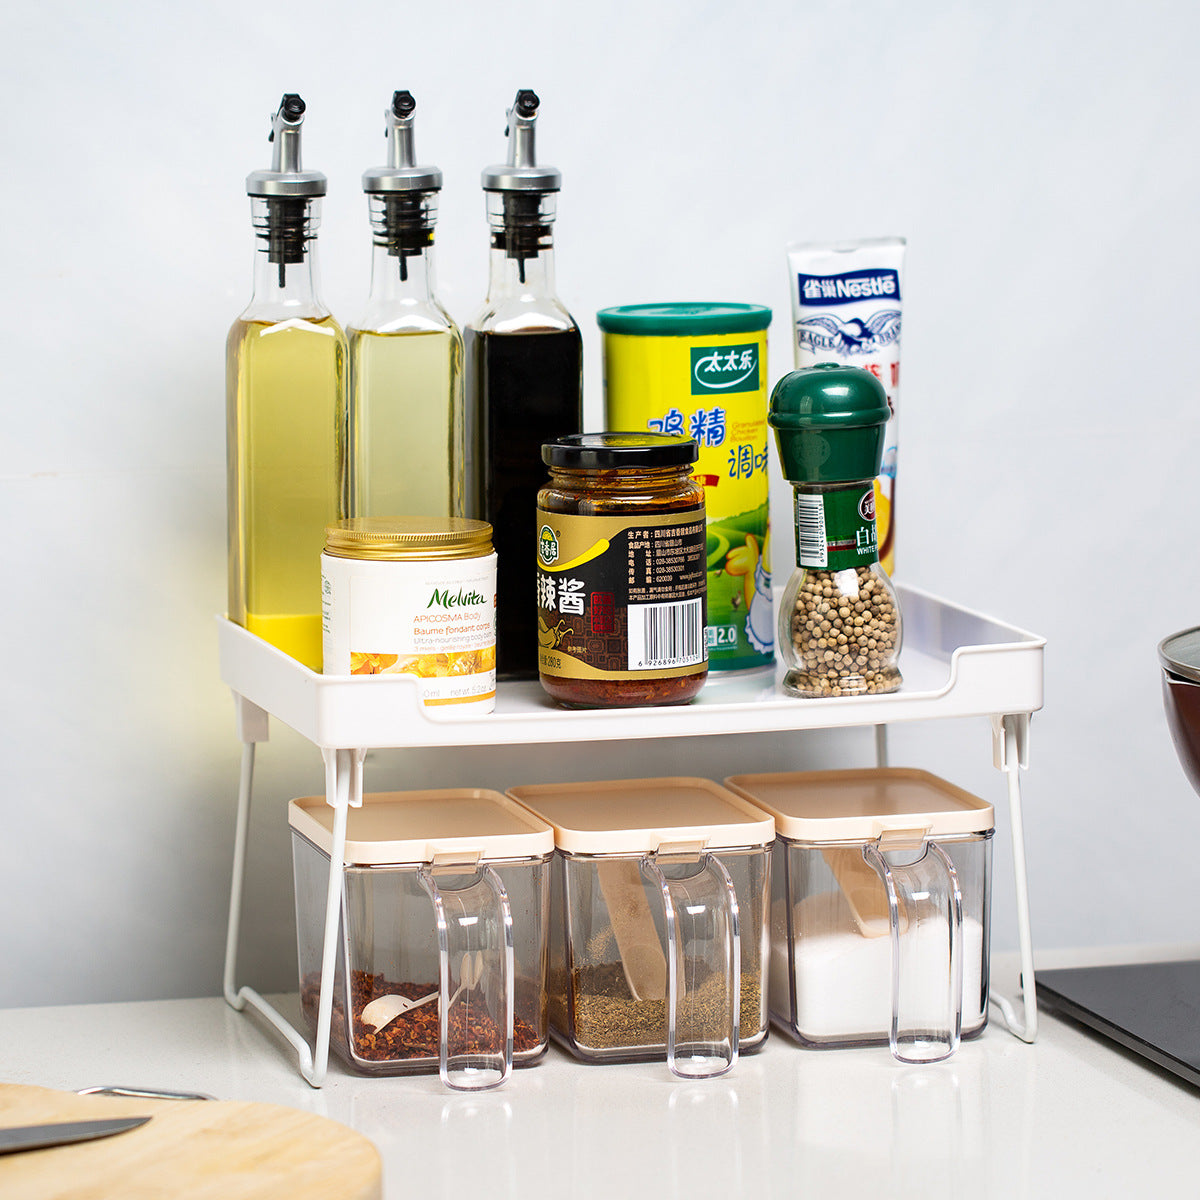 KitchenGear Organizer: All-in-One Rack for Organizing Kitchen Supplies